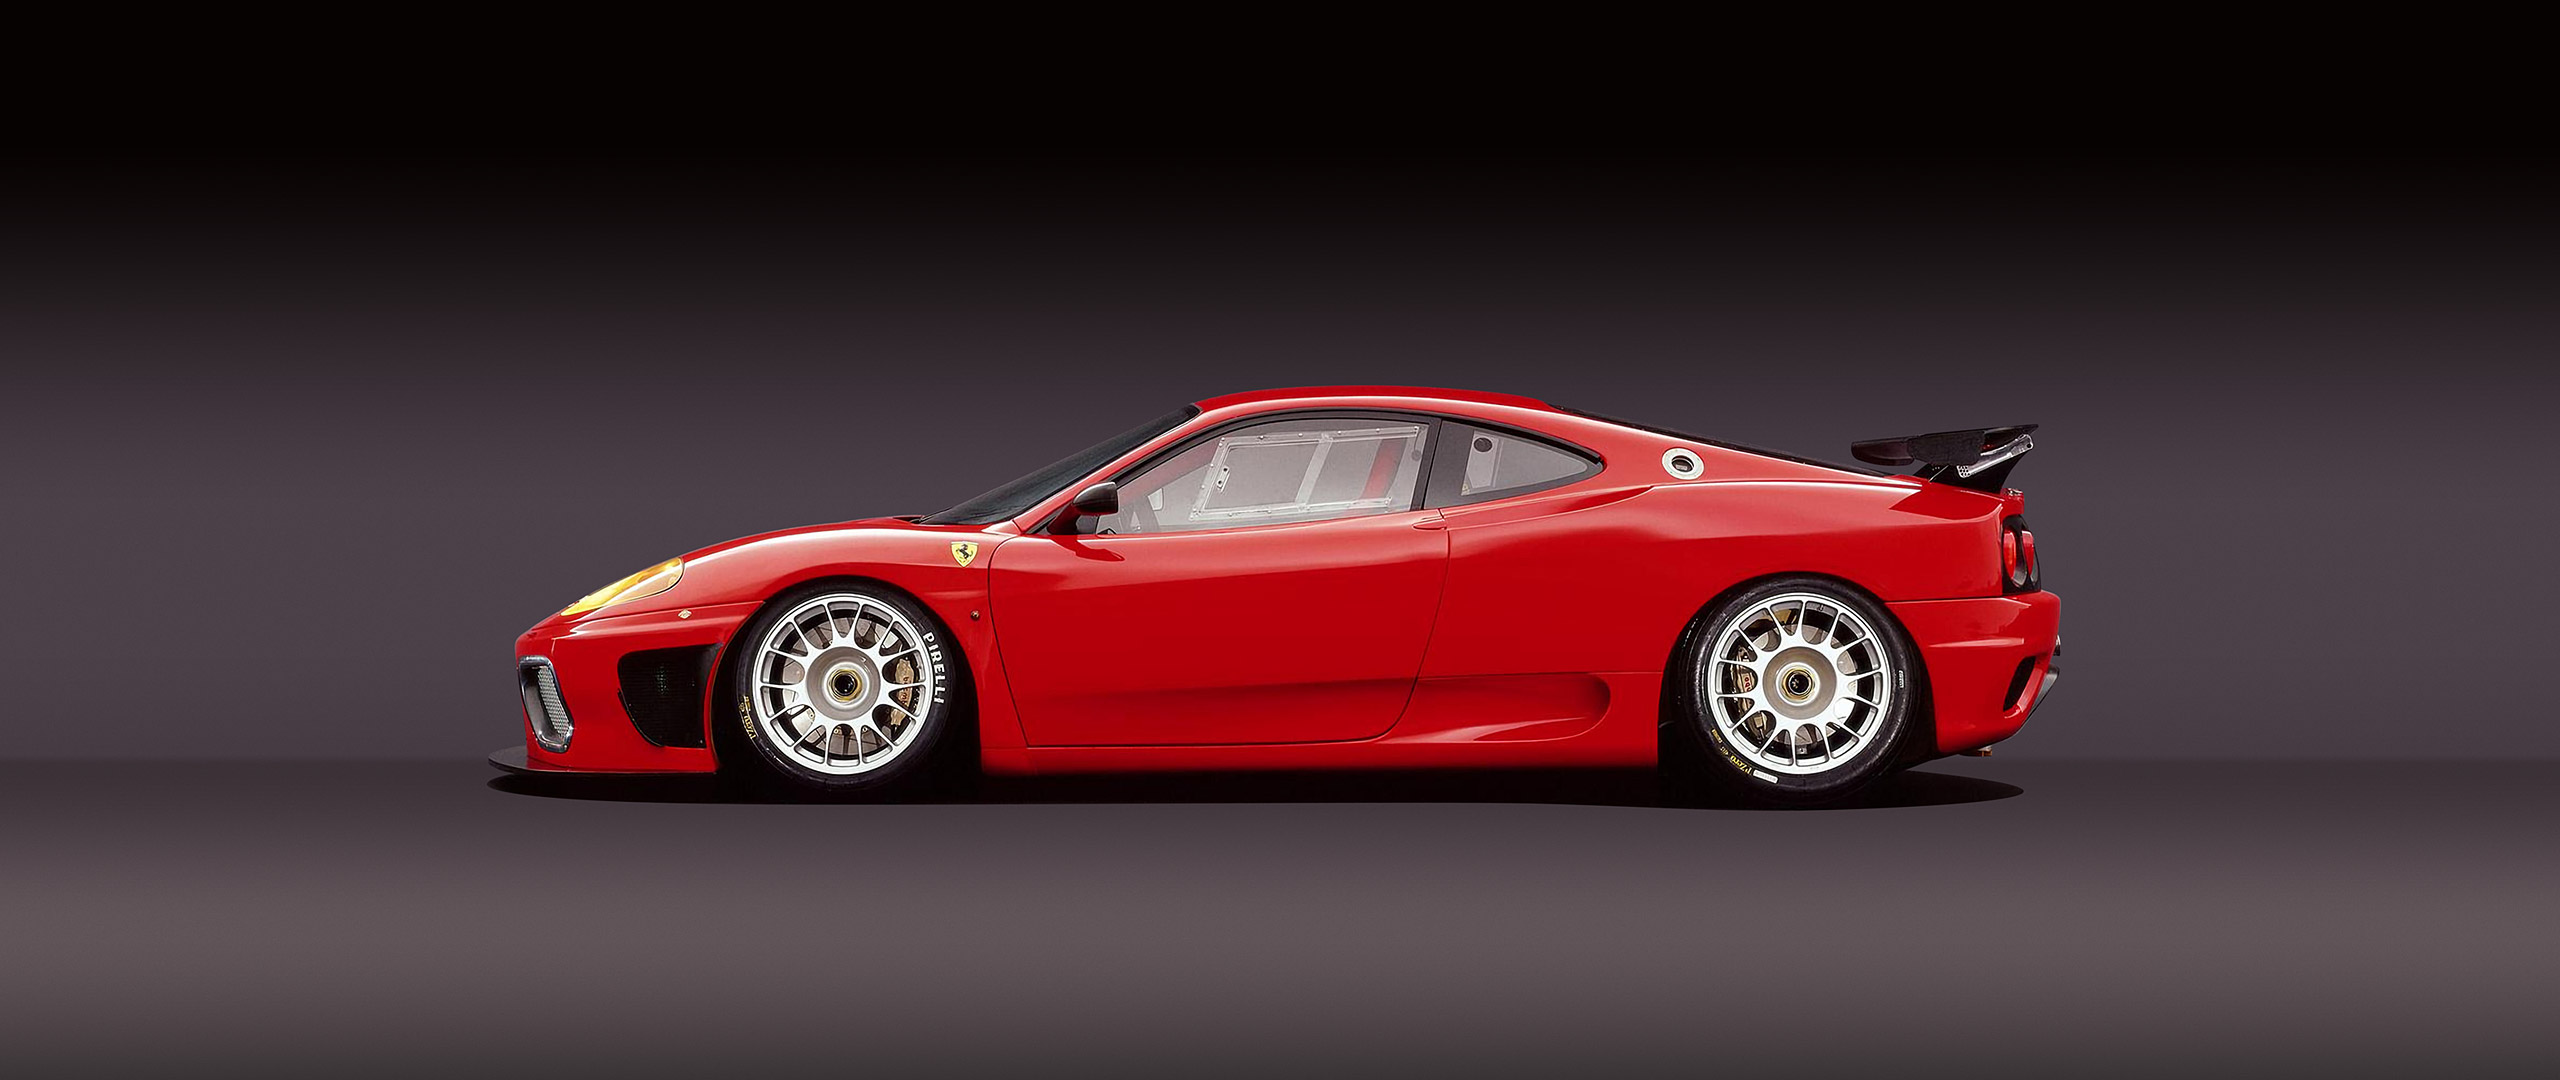  2003 Ferrari 360 GT Wallpaper.